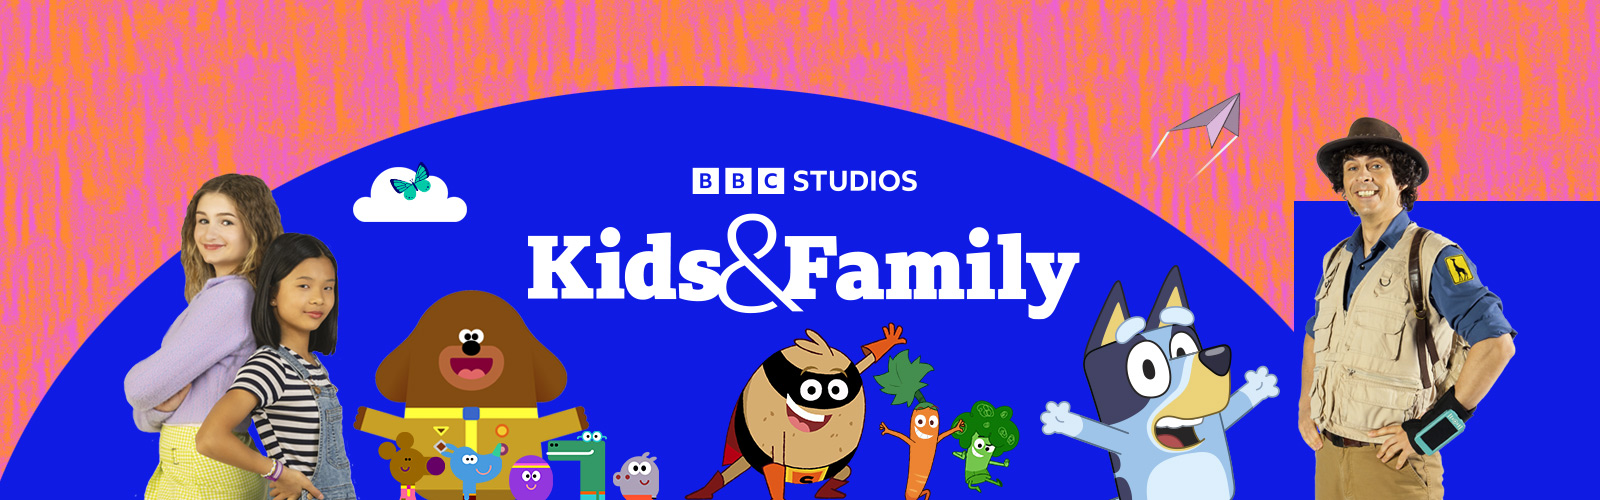 BBC Kids & Family - Homepage banner - April 2023